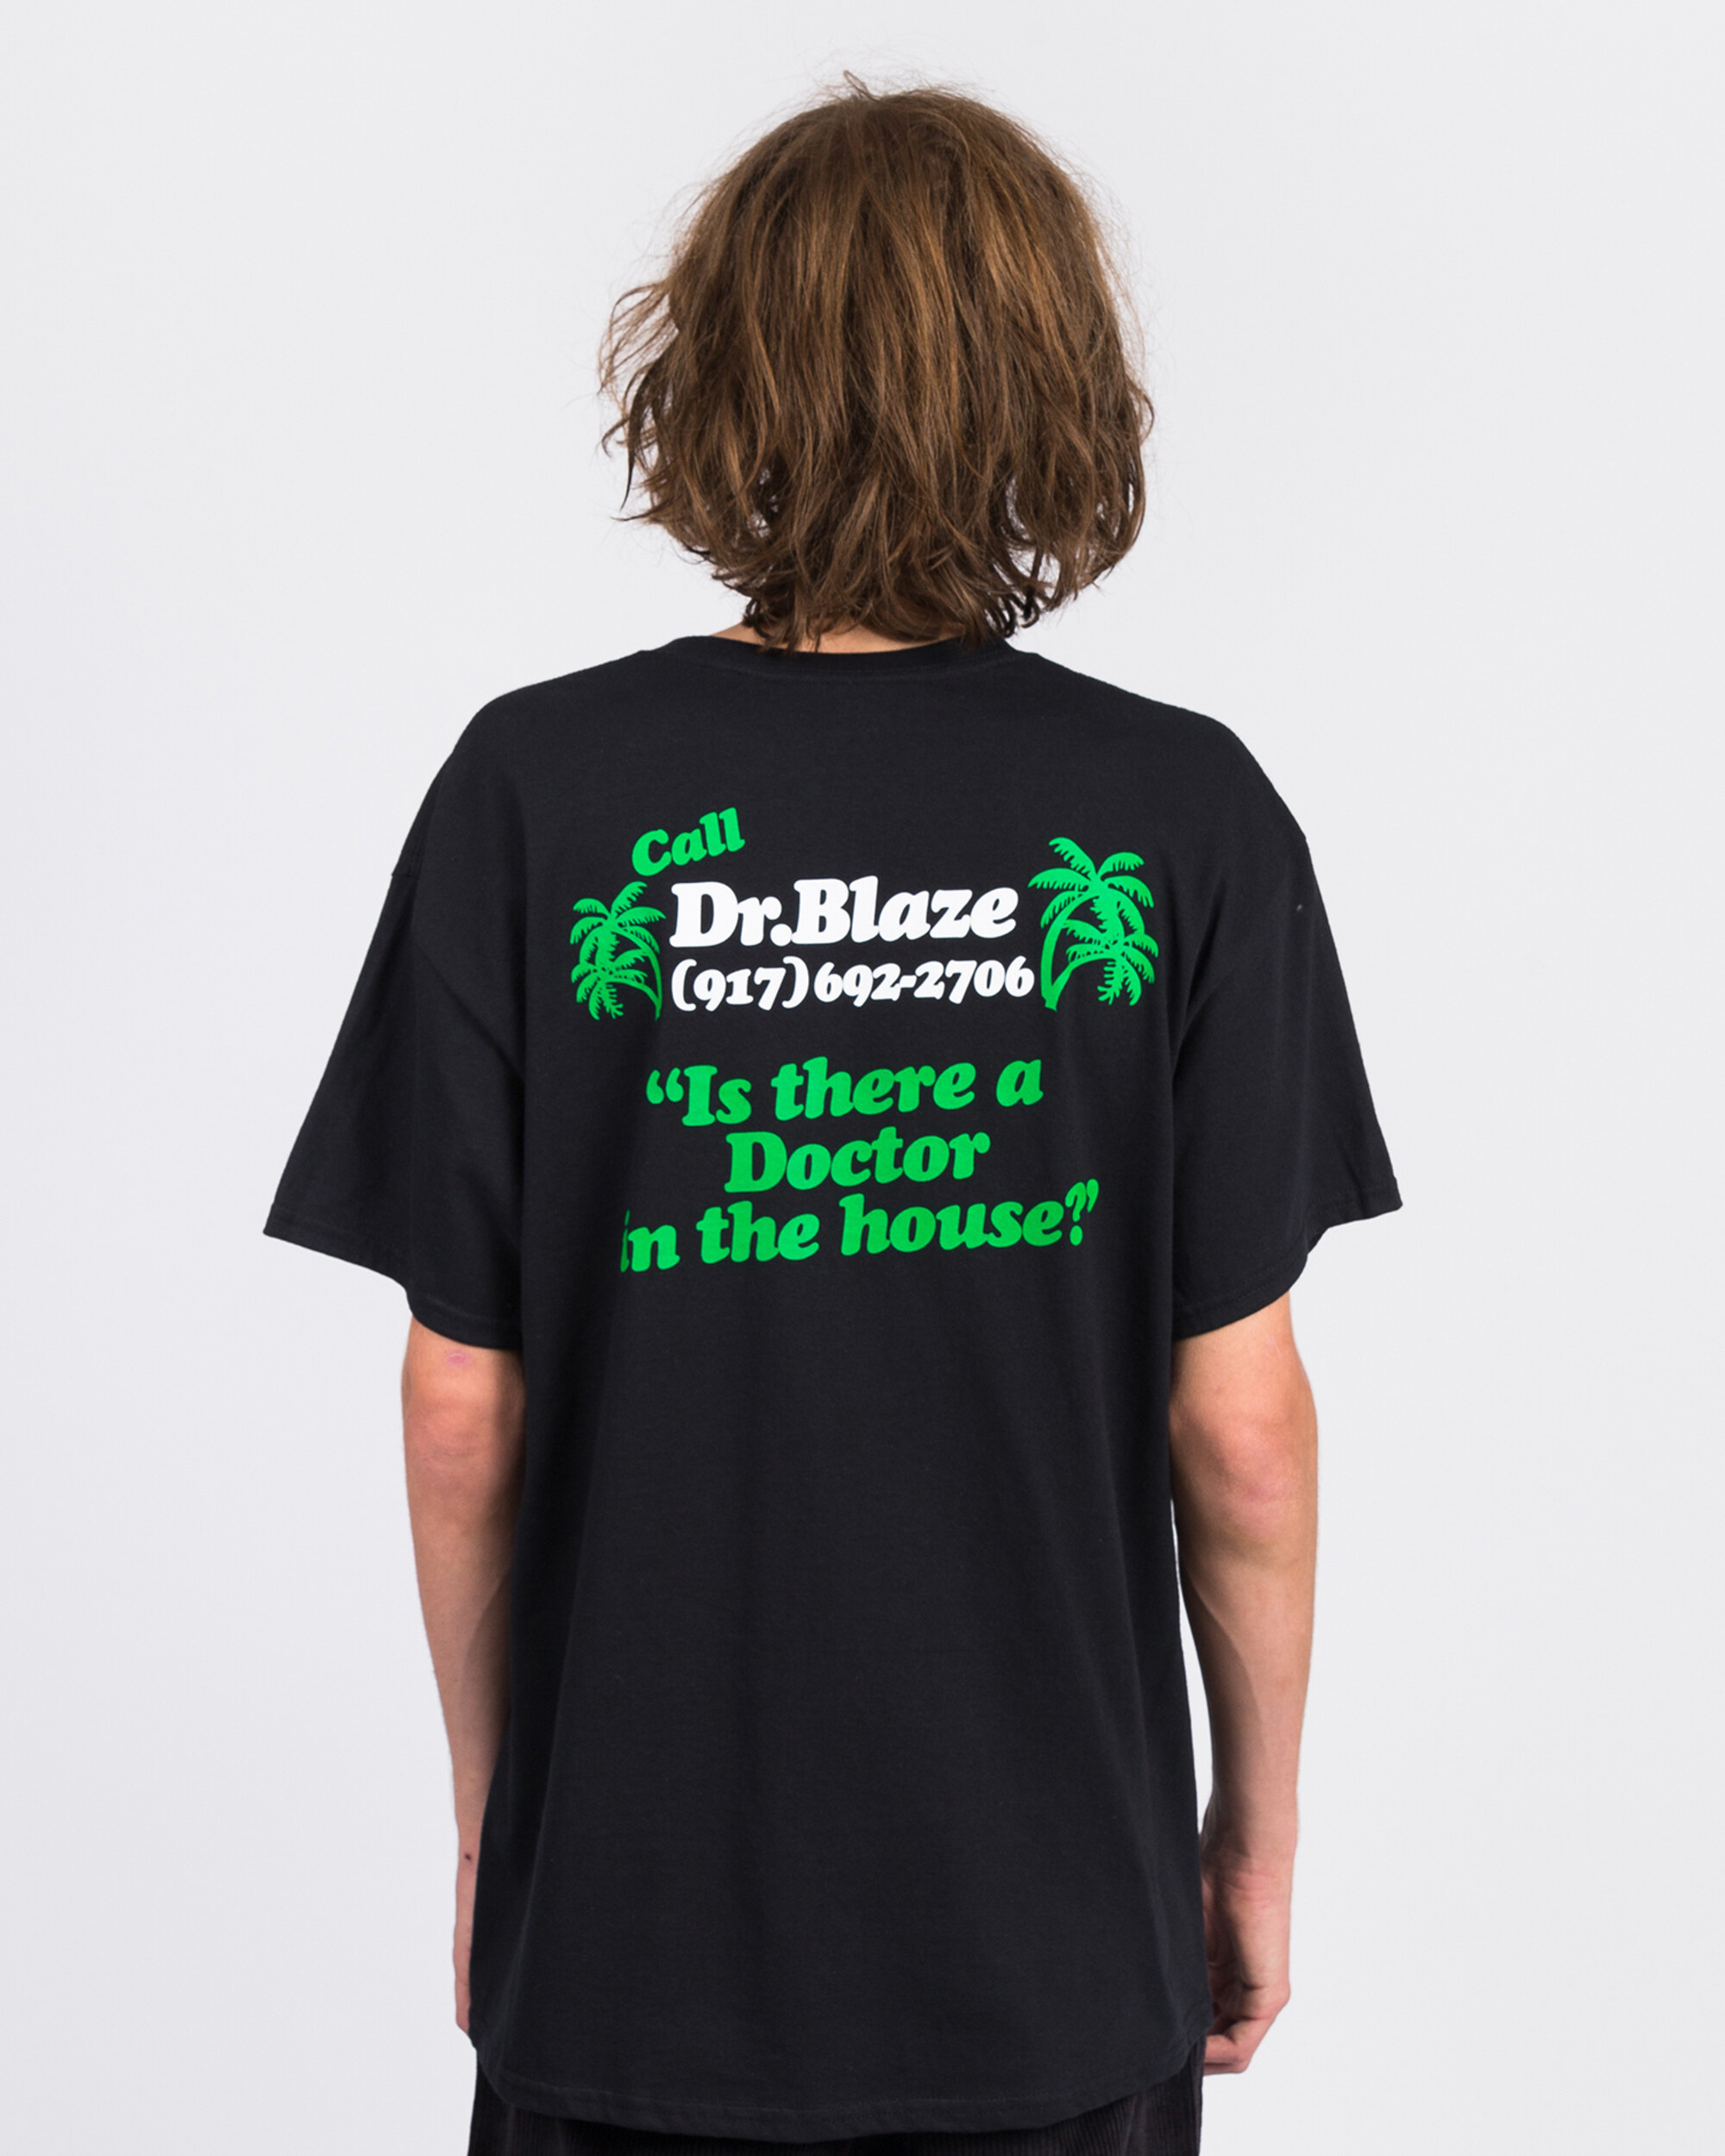 Call me 917 Dr. Blaze T-shirt Black